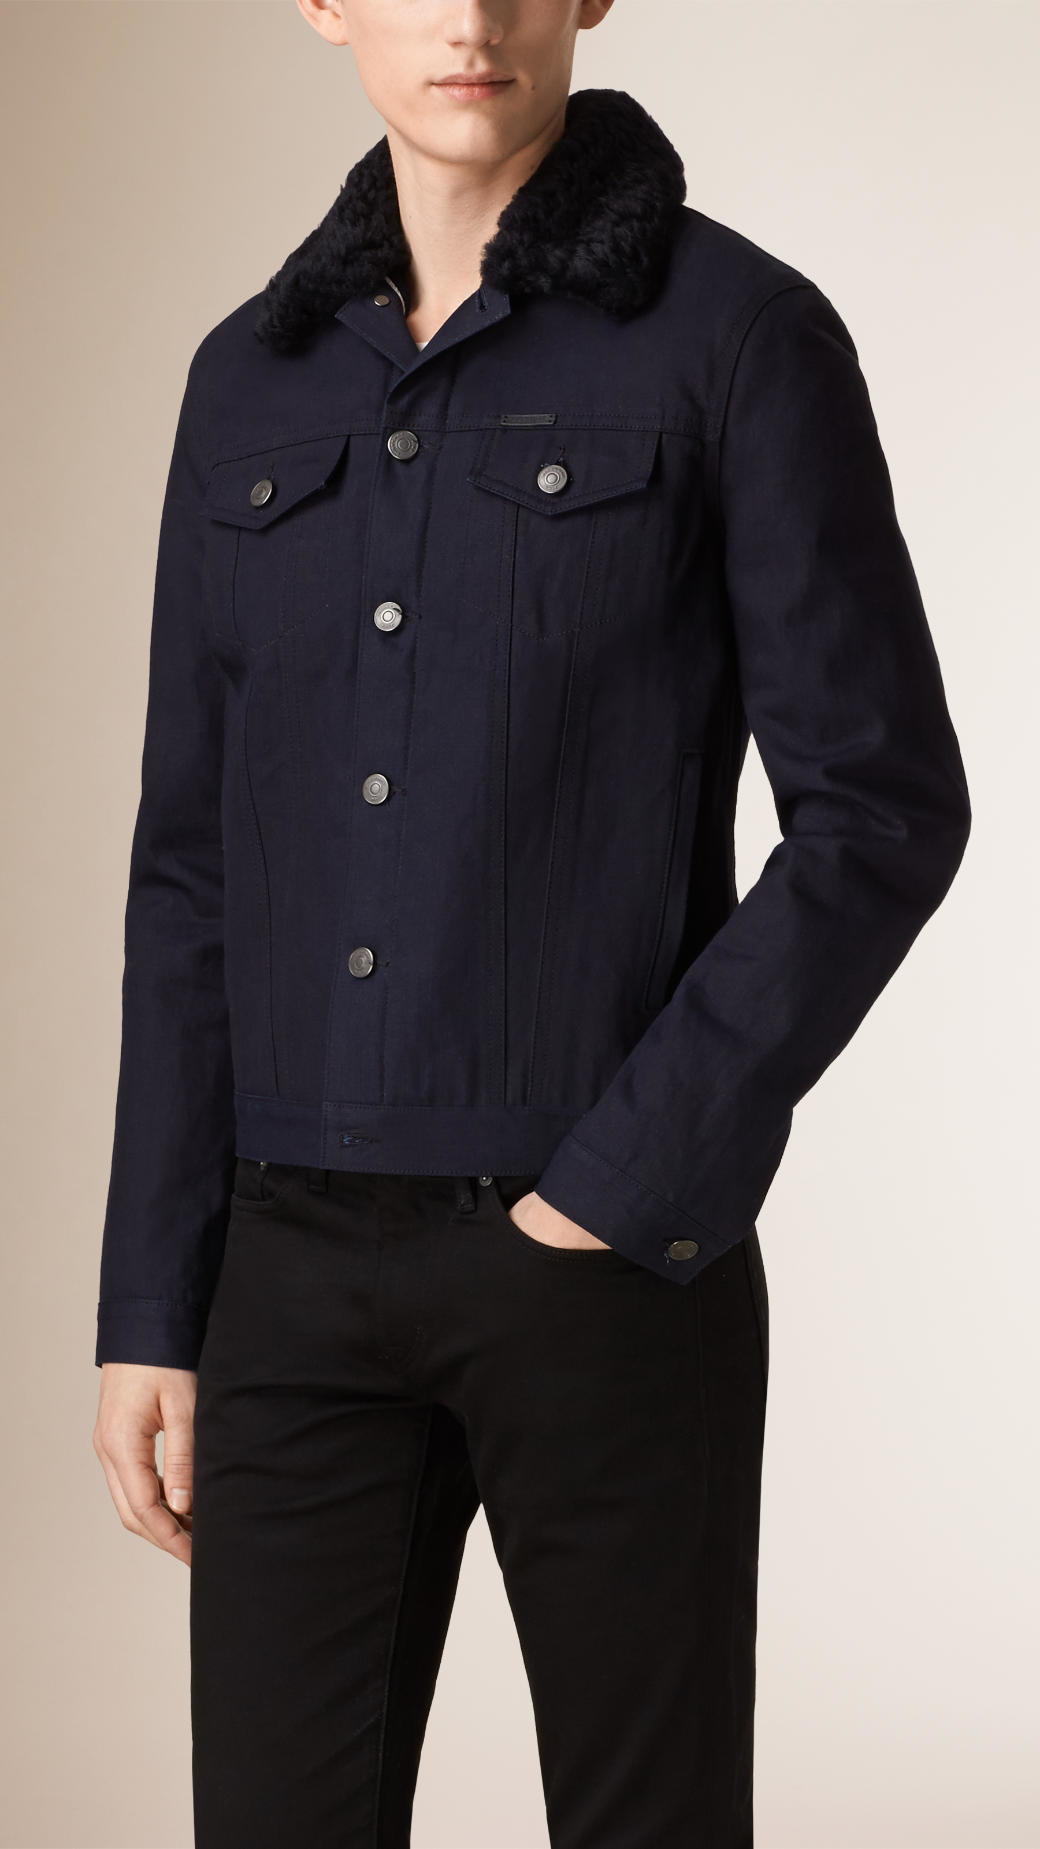 Lyst - Burberry Shearling-Lined Selvedge Denim Jacket in Blue for Men